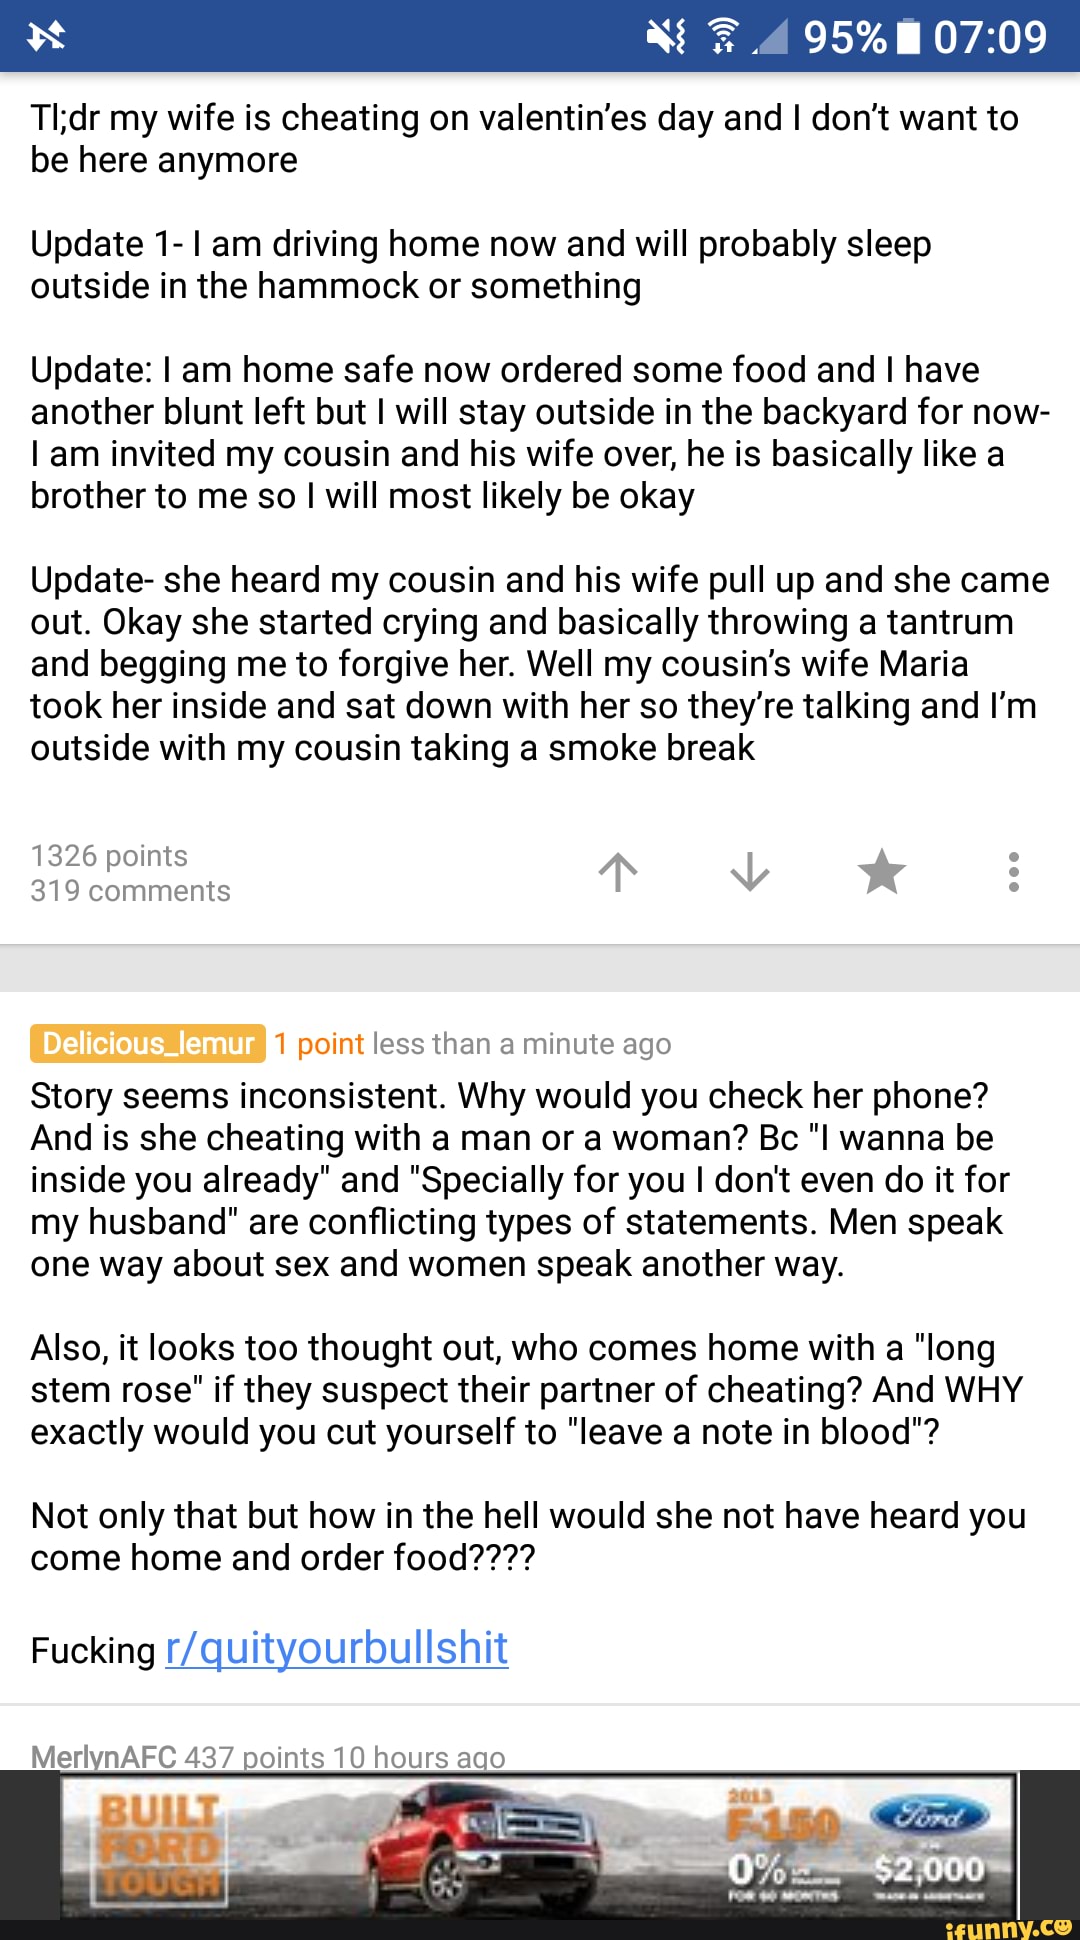 Fake cheating story pic